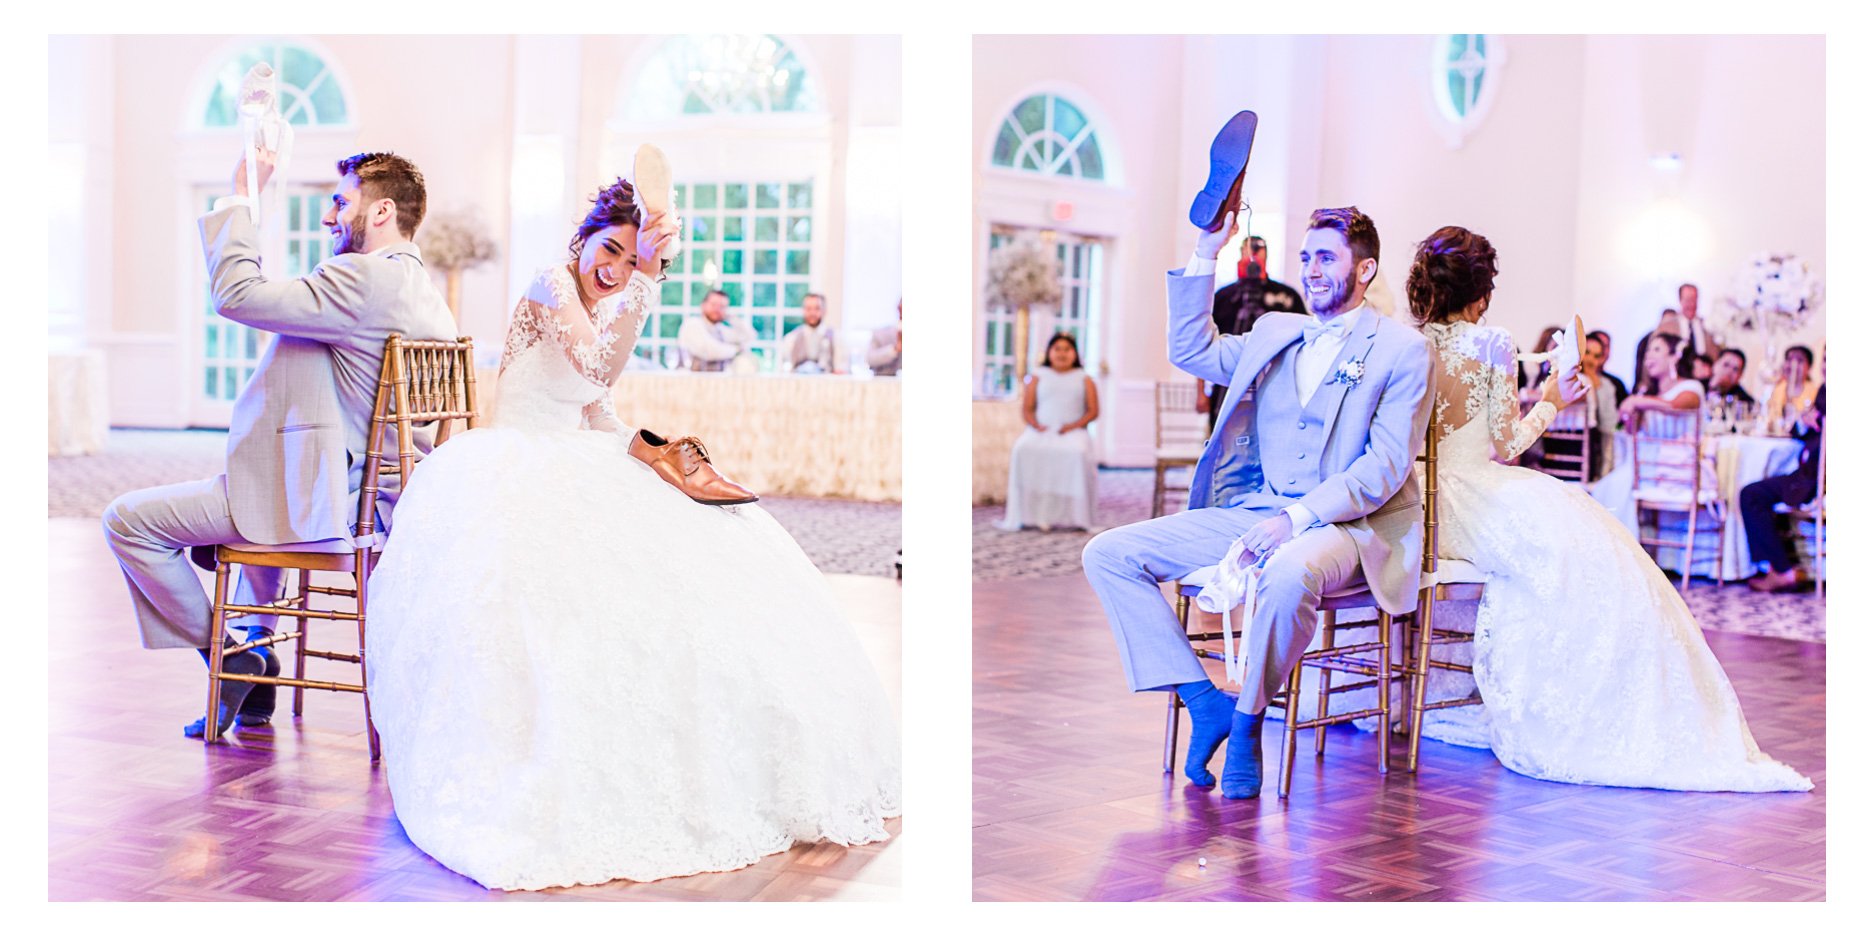 manassas-virginia-wedding-reception-foxchase-manor-shoe-game-groom-laughing.jpg